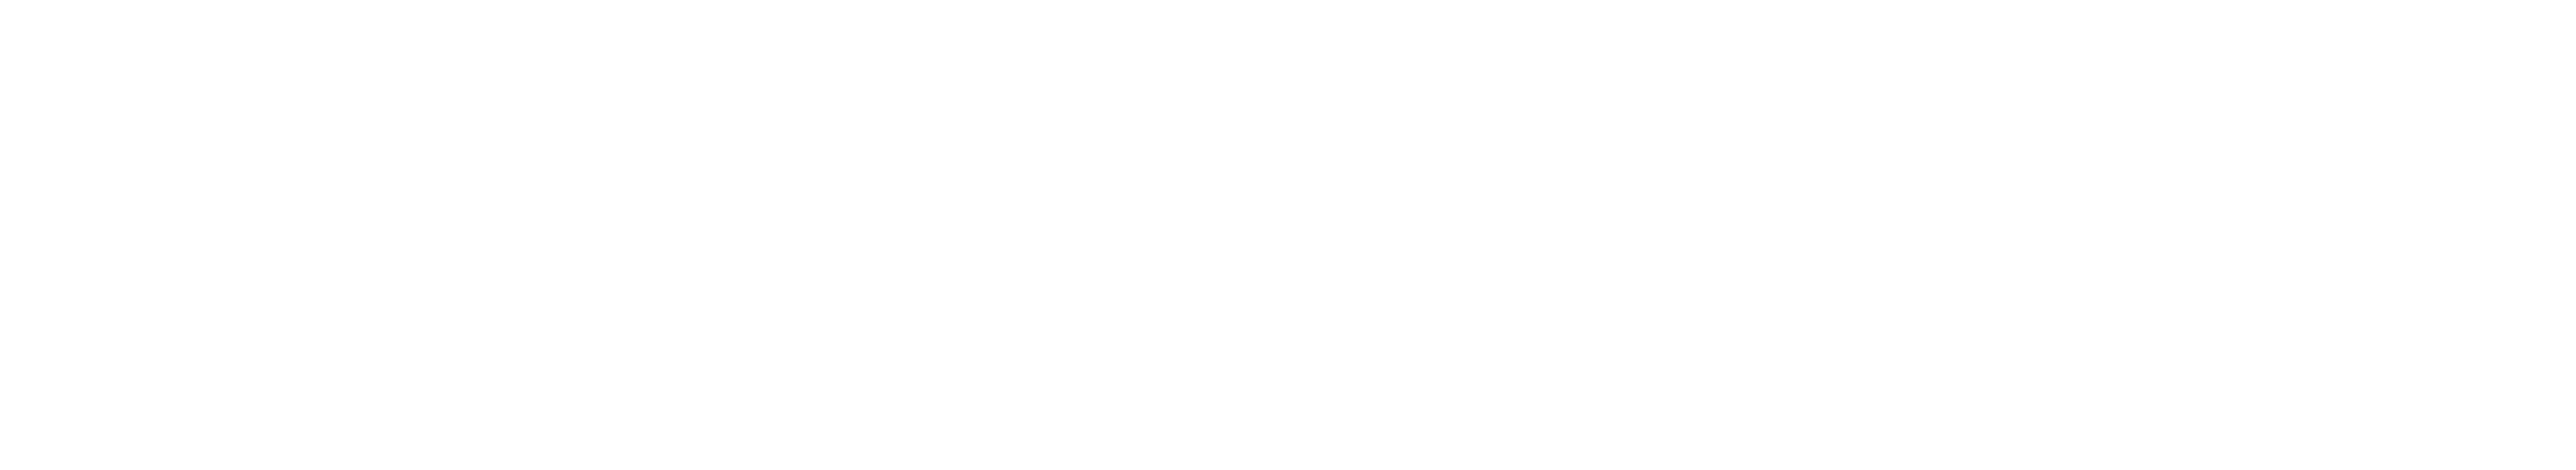 Waahe Logo Straight White-1